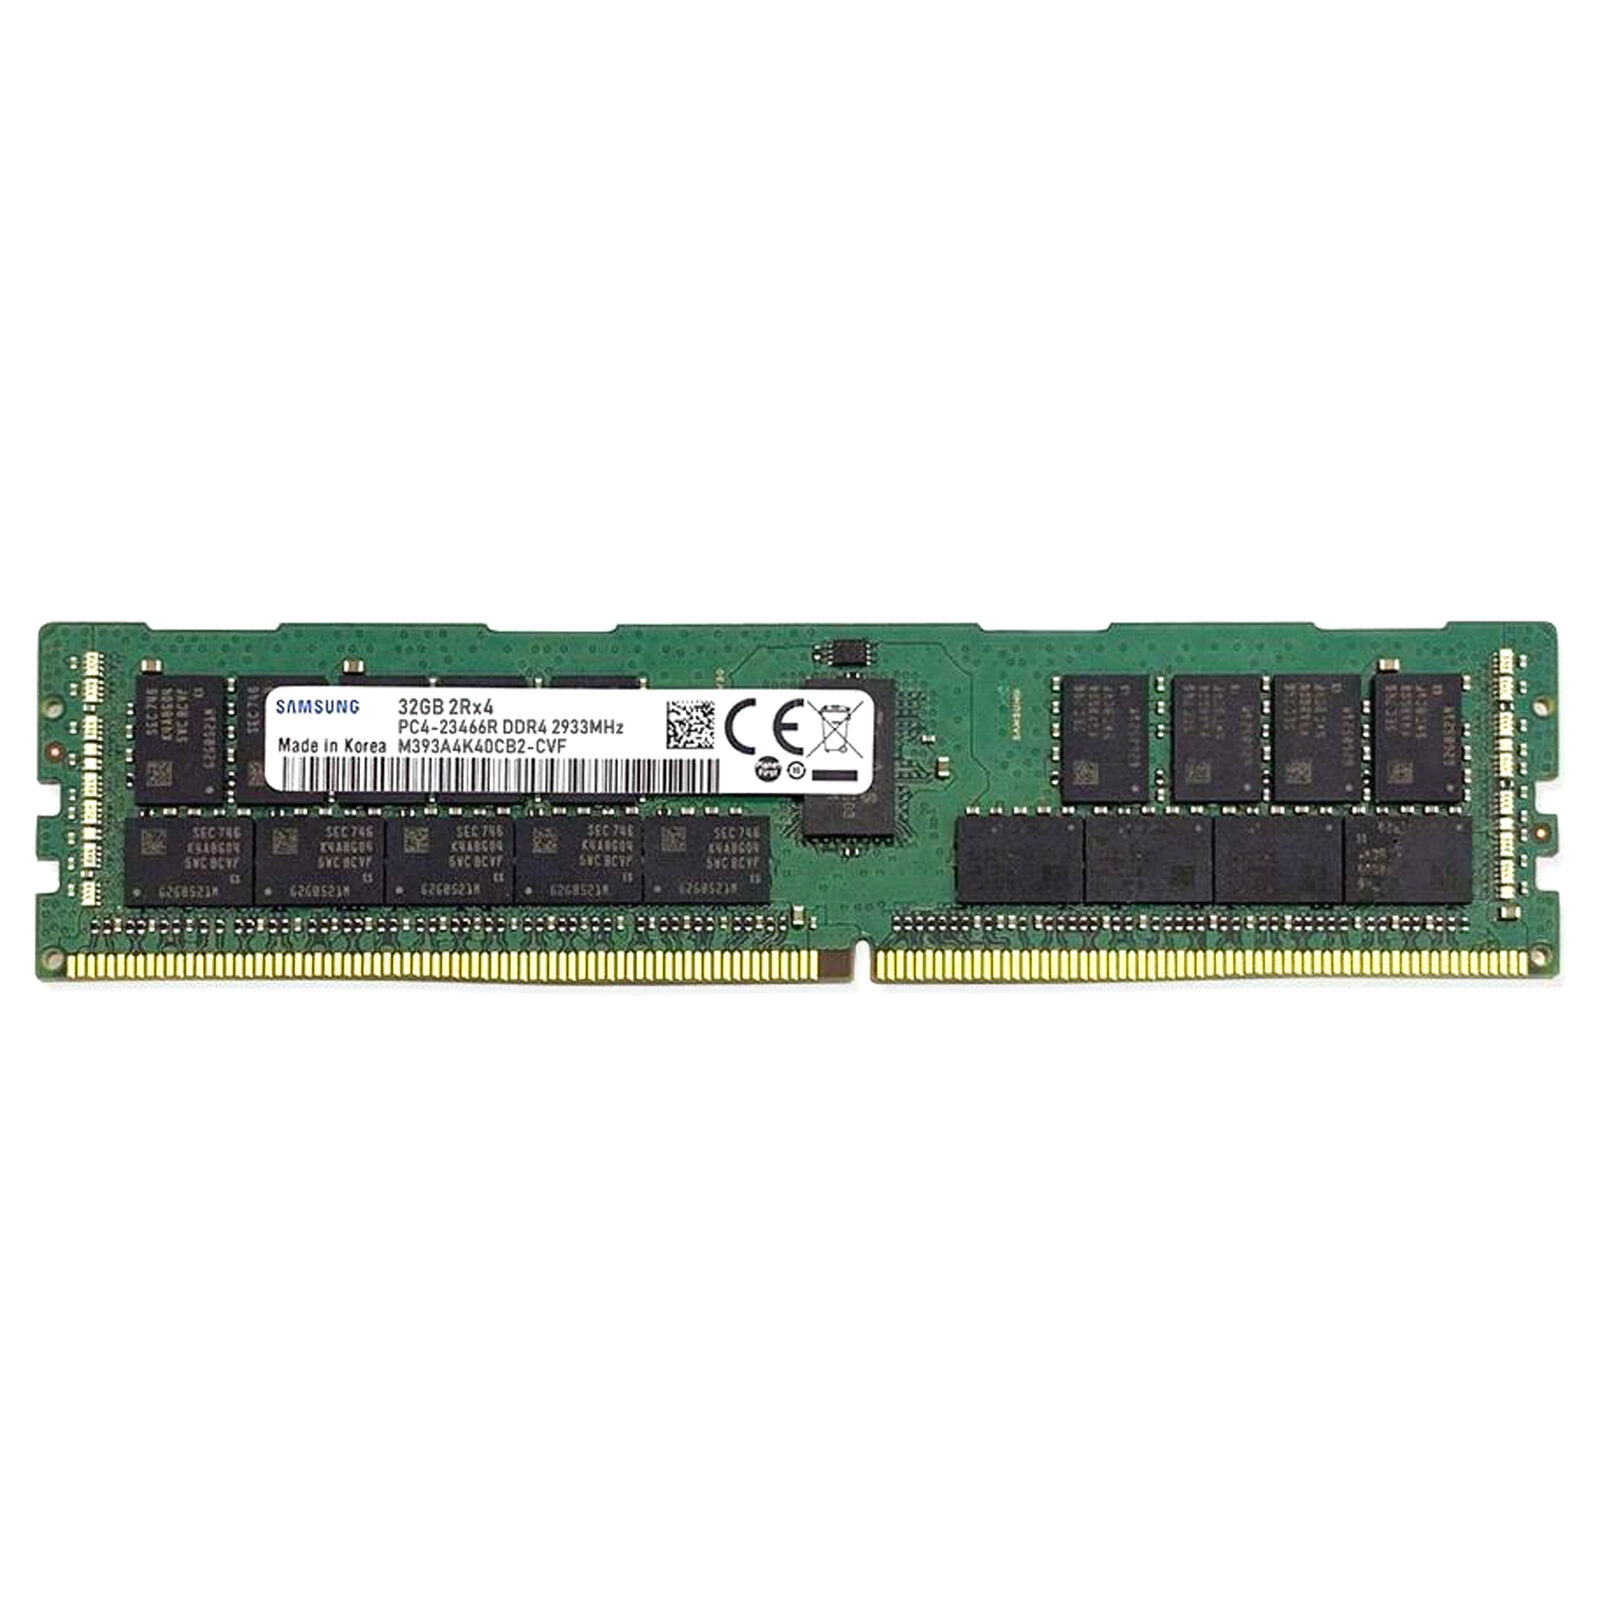 Samsung 32GB 2933MHz DDR4 RDIMM 288-Pin 1.2V 2RX4 Server Memory M393A4K40CB2-CVF